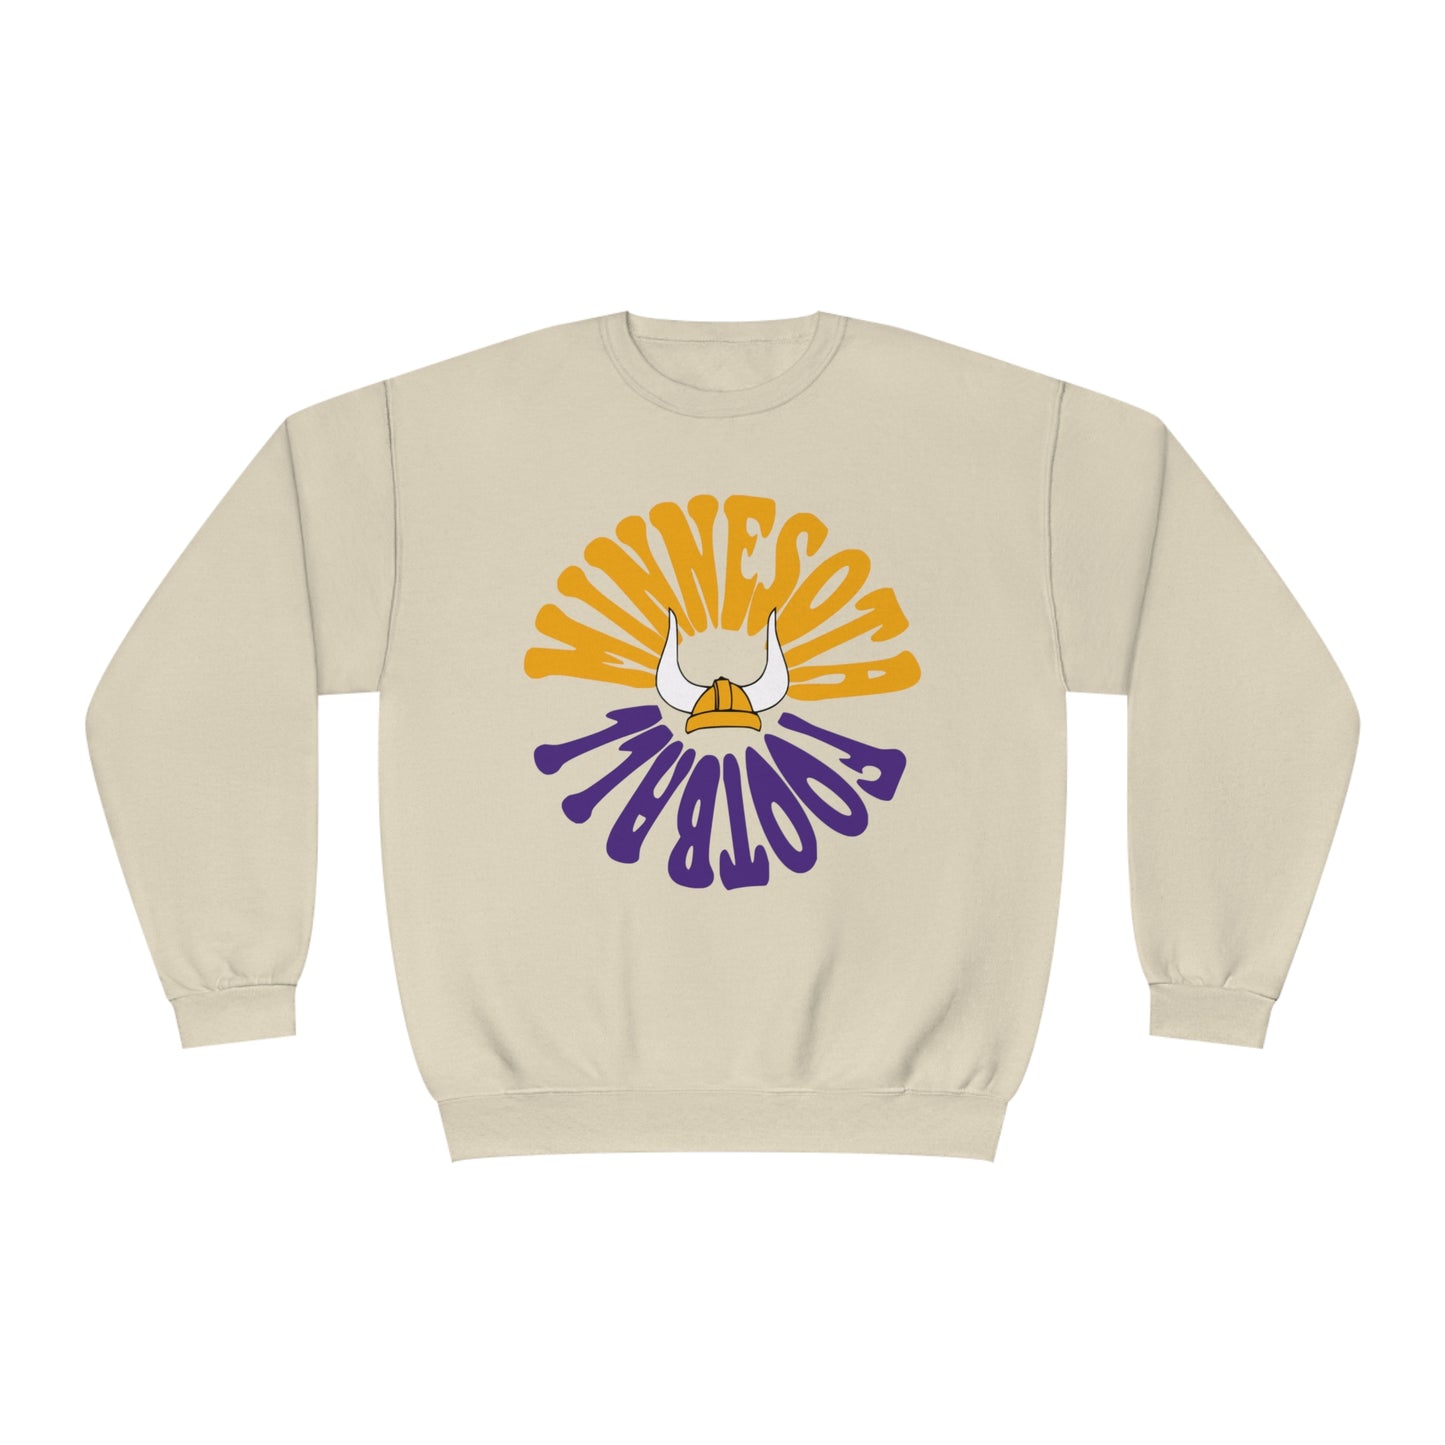 Hippy Retro Minnesota Vikings Crewneck - Retro Unisex Football Sweatshirt - Men's & Women's 90's Oversized Hoodie - Design 2